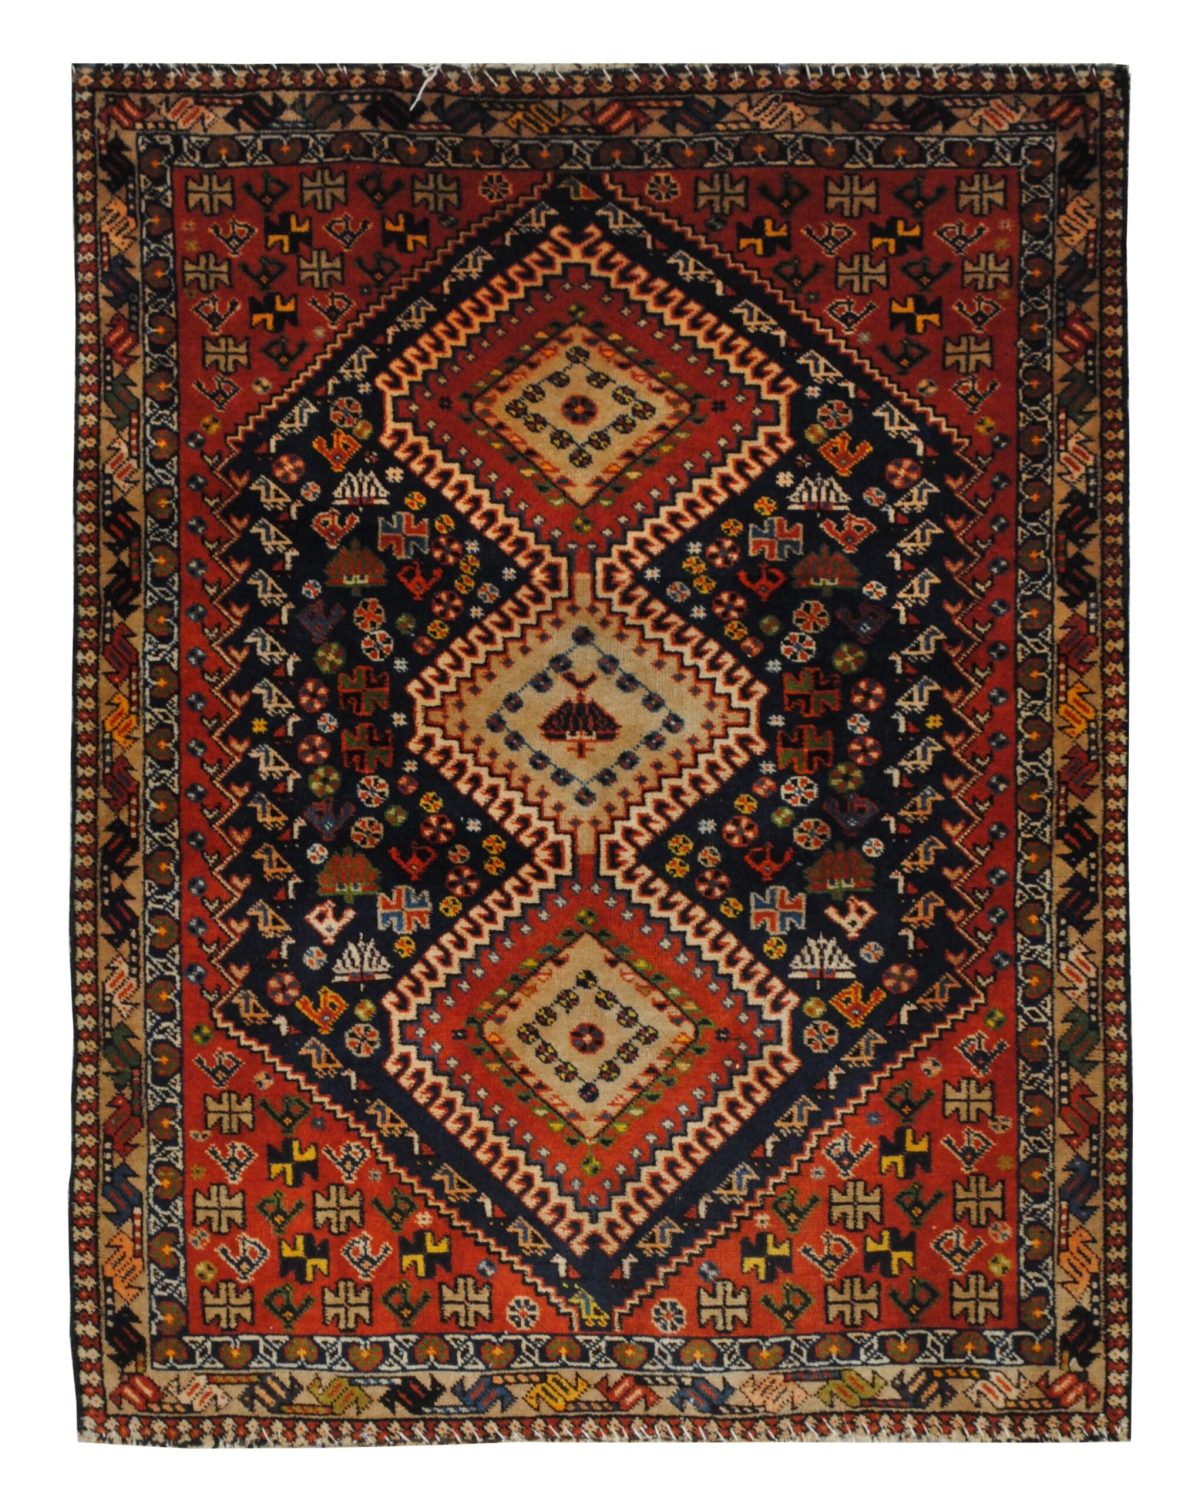 Persian Yallameh 3' 7" x 4' 8" Handmade Area Rug - Shabahang Royal Carpet